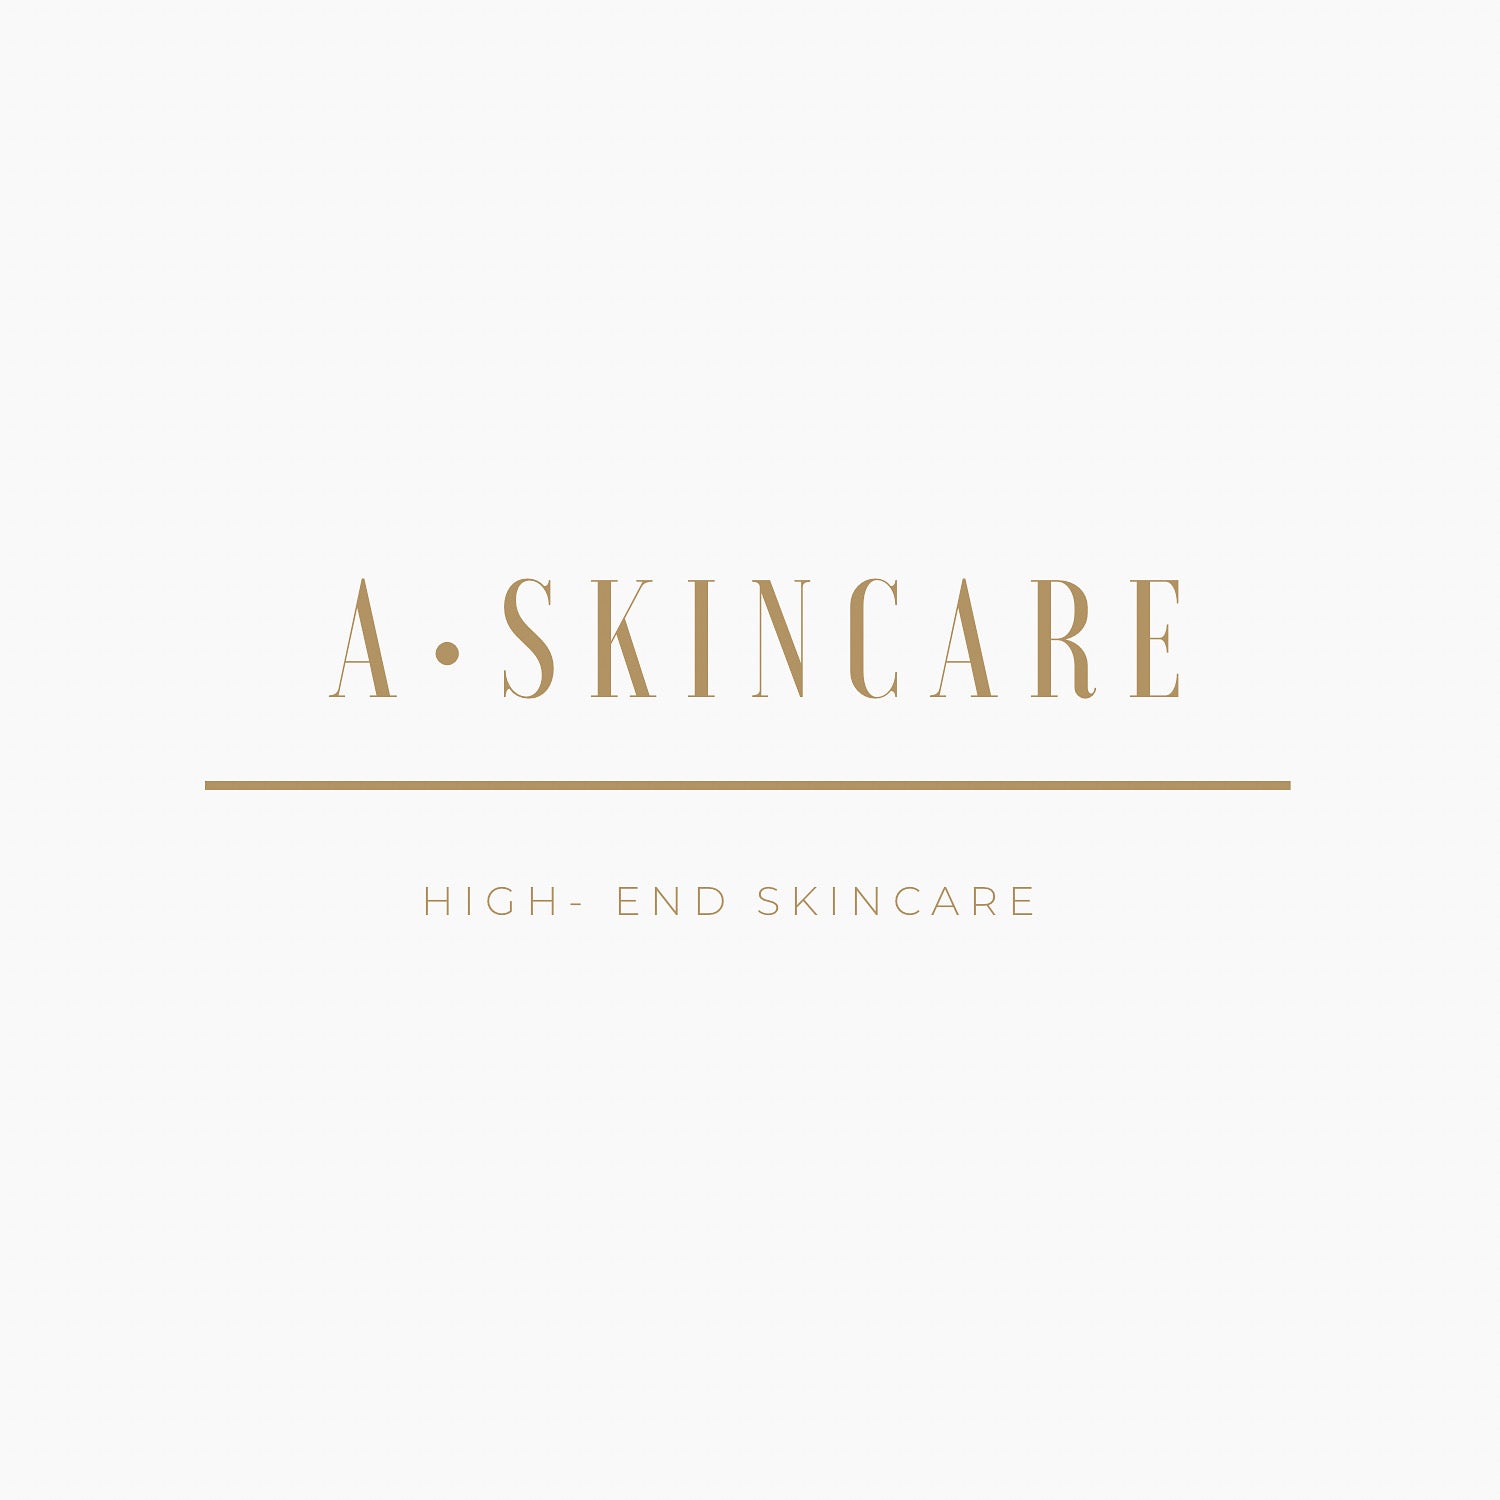 skincare